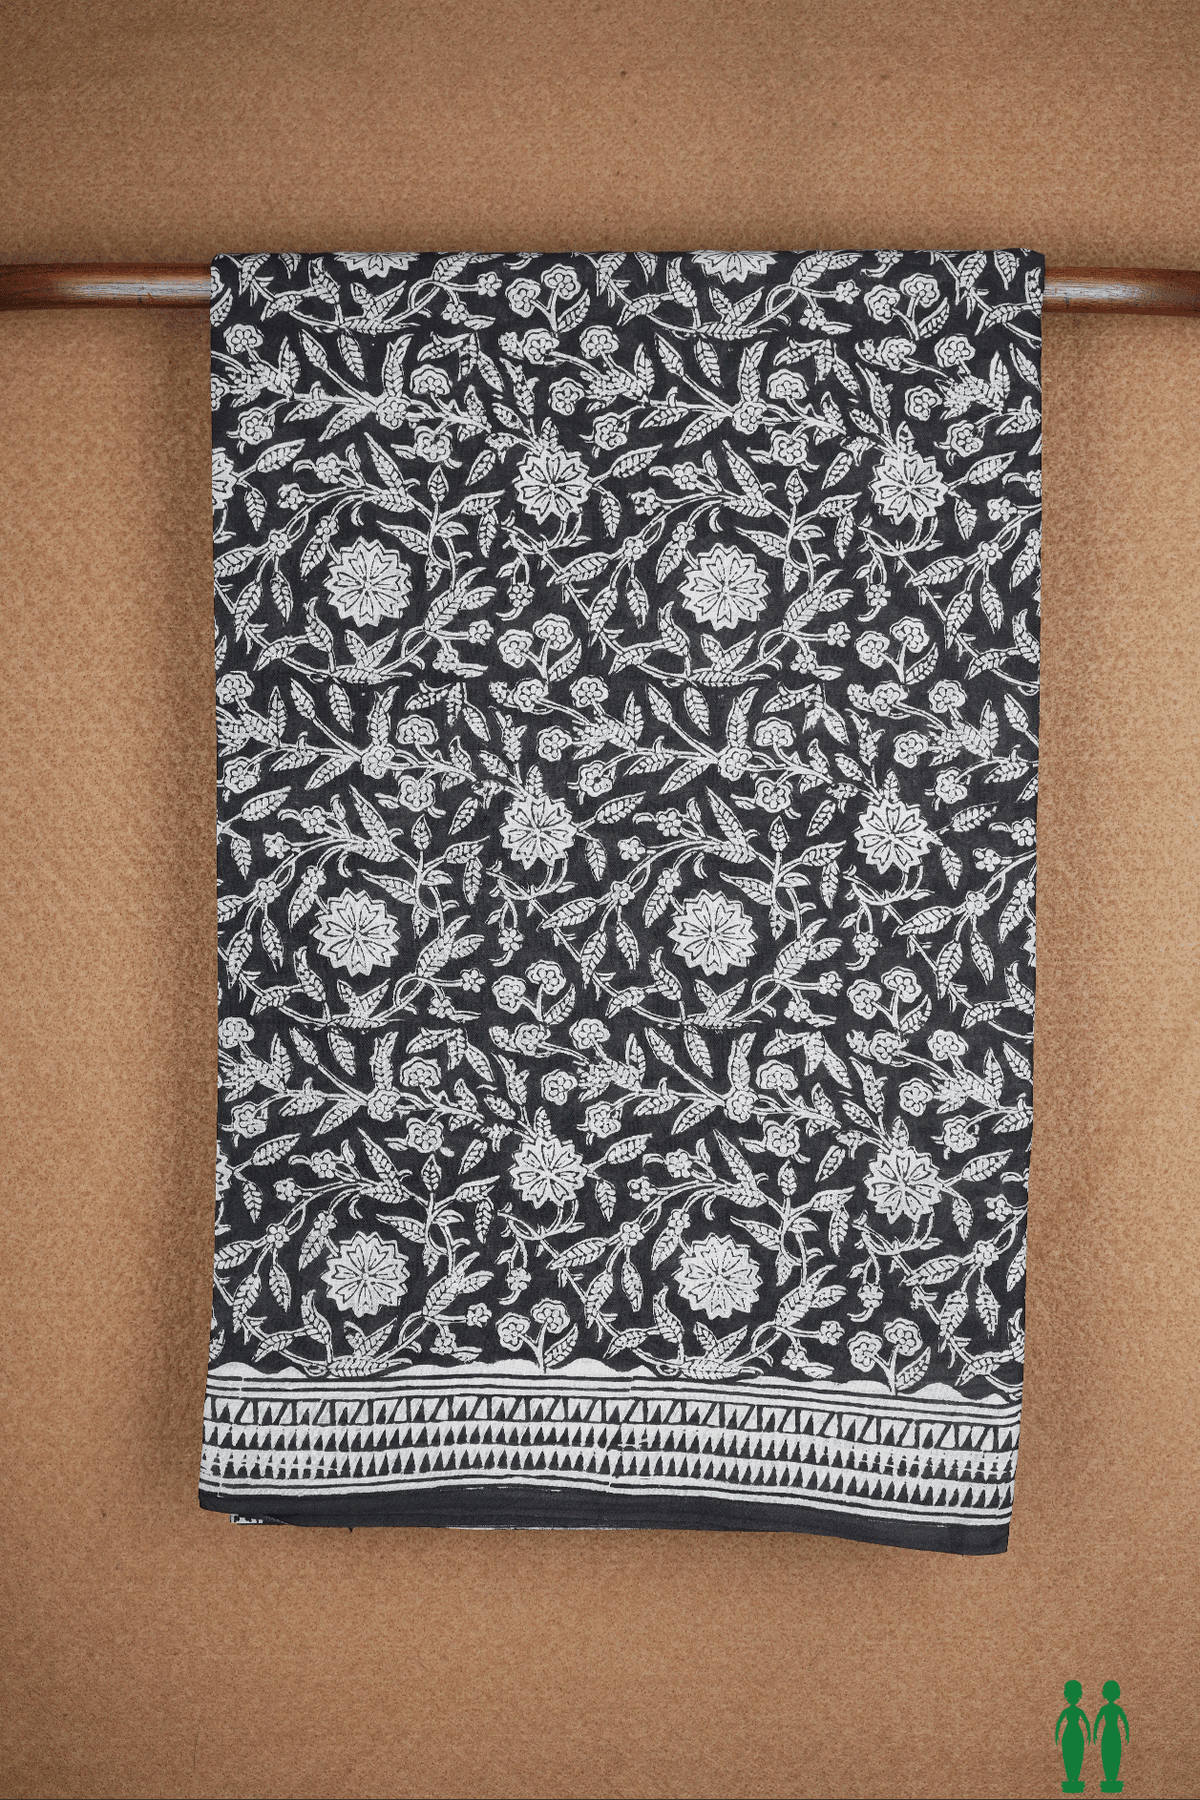 Allover Floral Printed Design Black Jaipur Cotton Saree